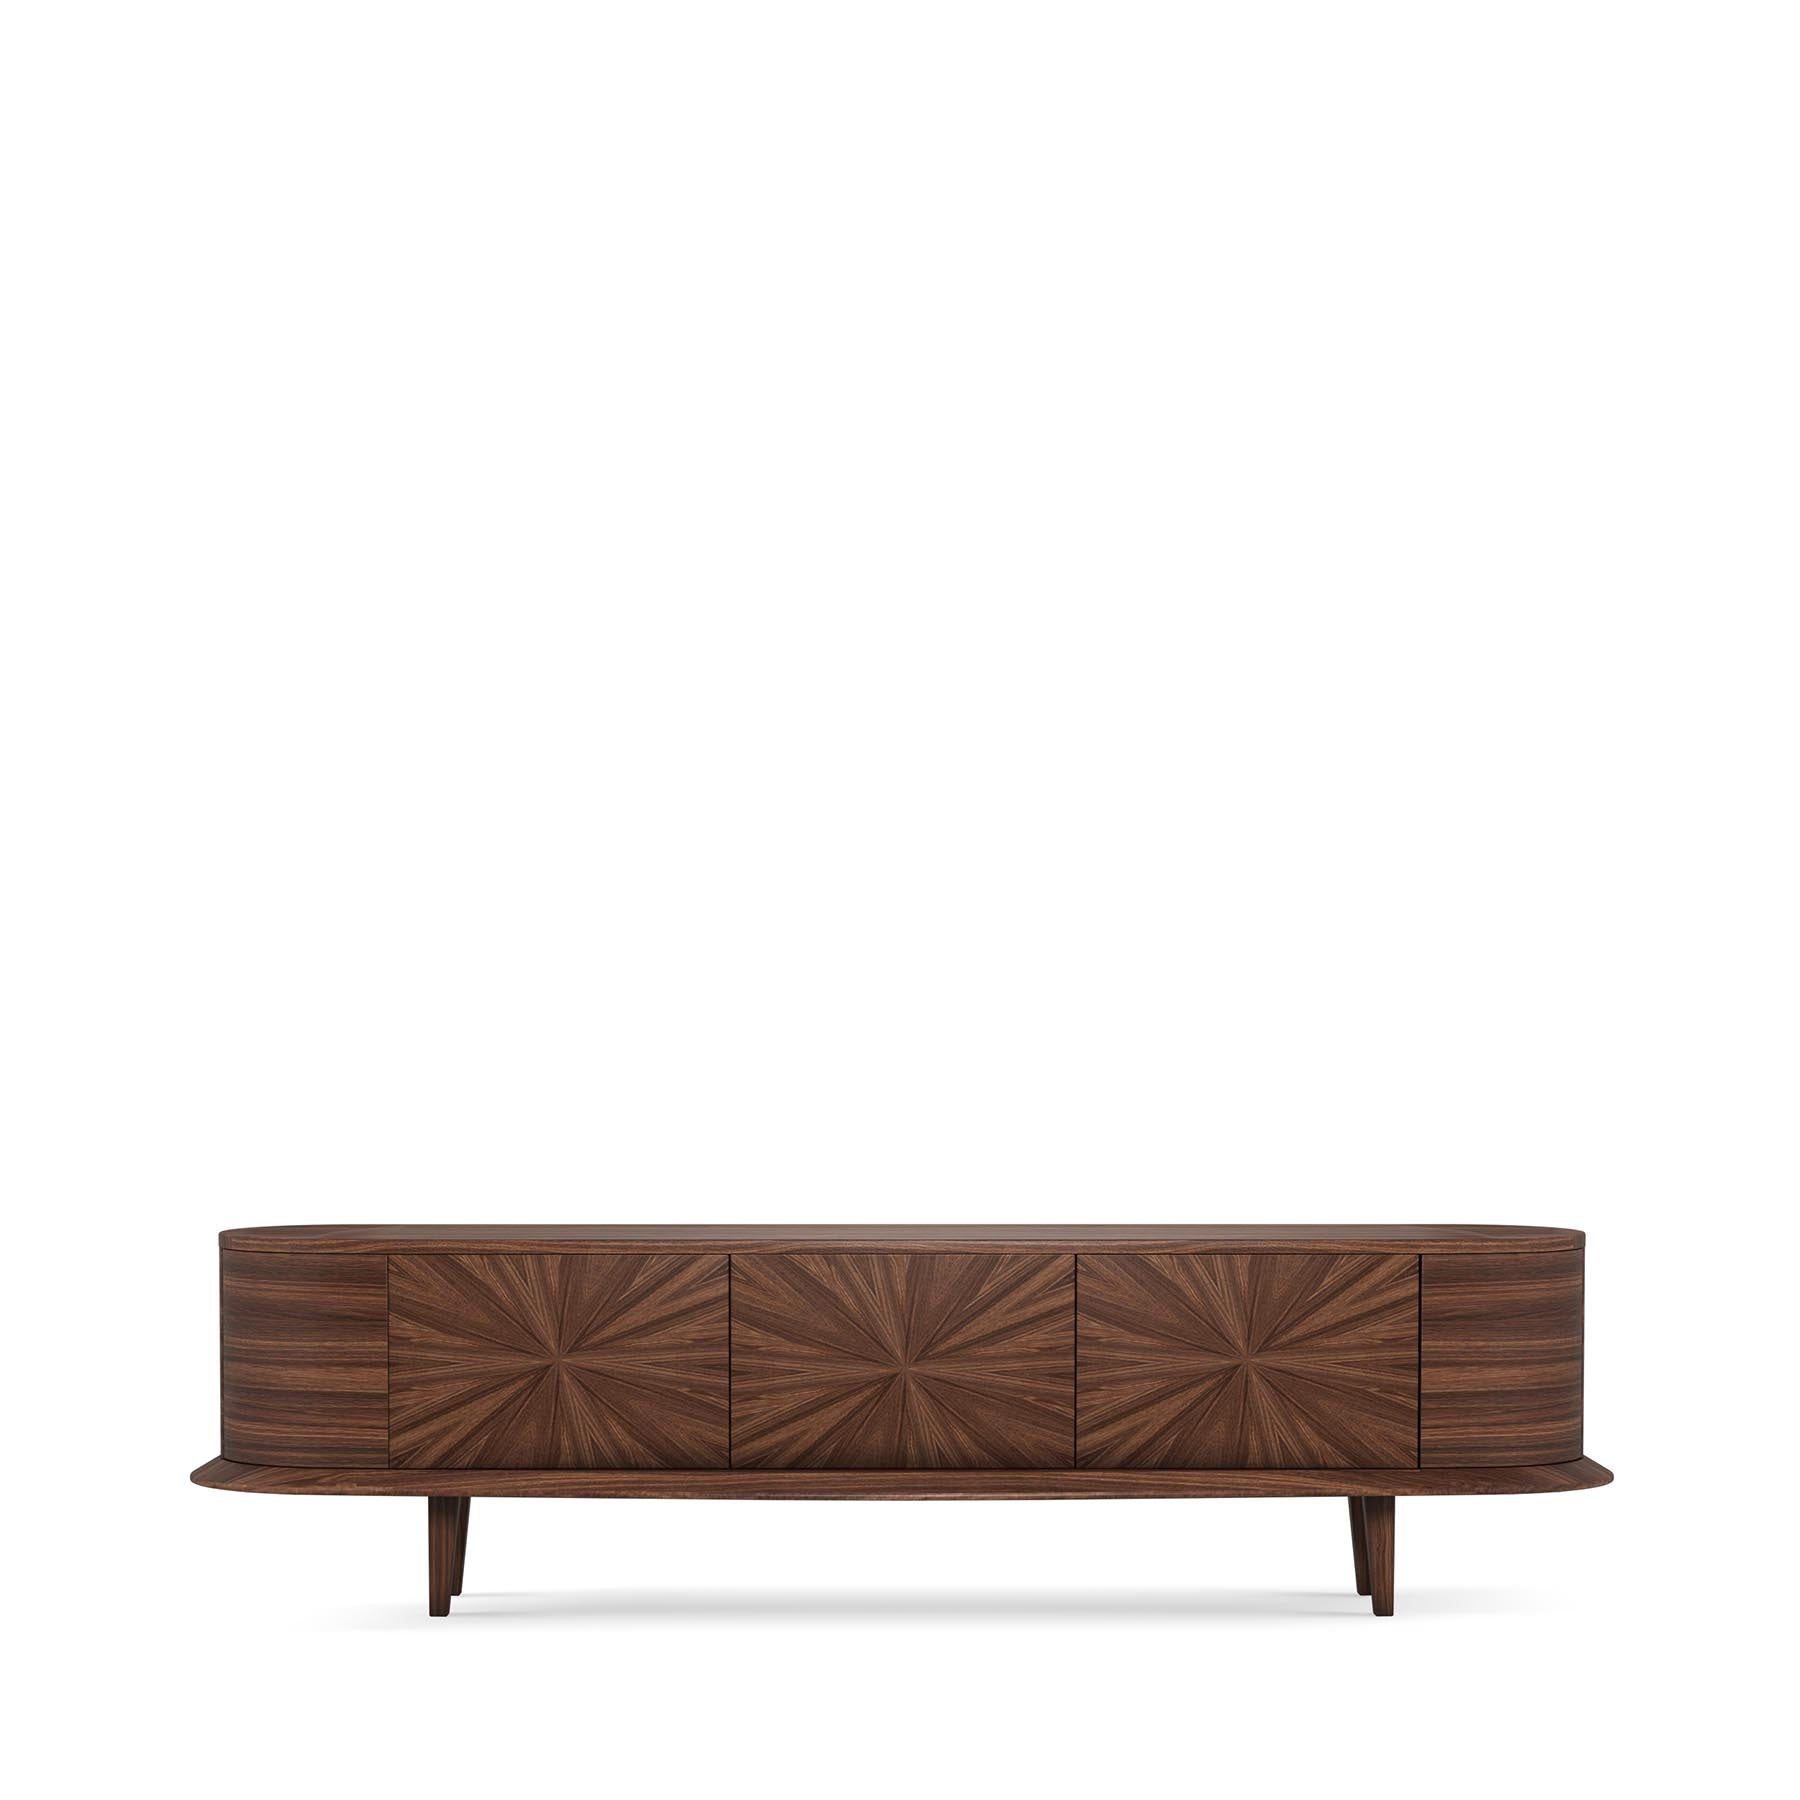 GRANT - SIDEBOARD | Modern Furniture + Decor